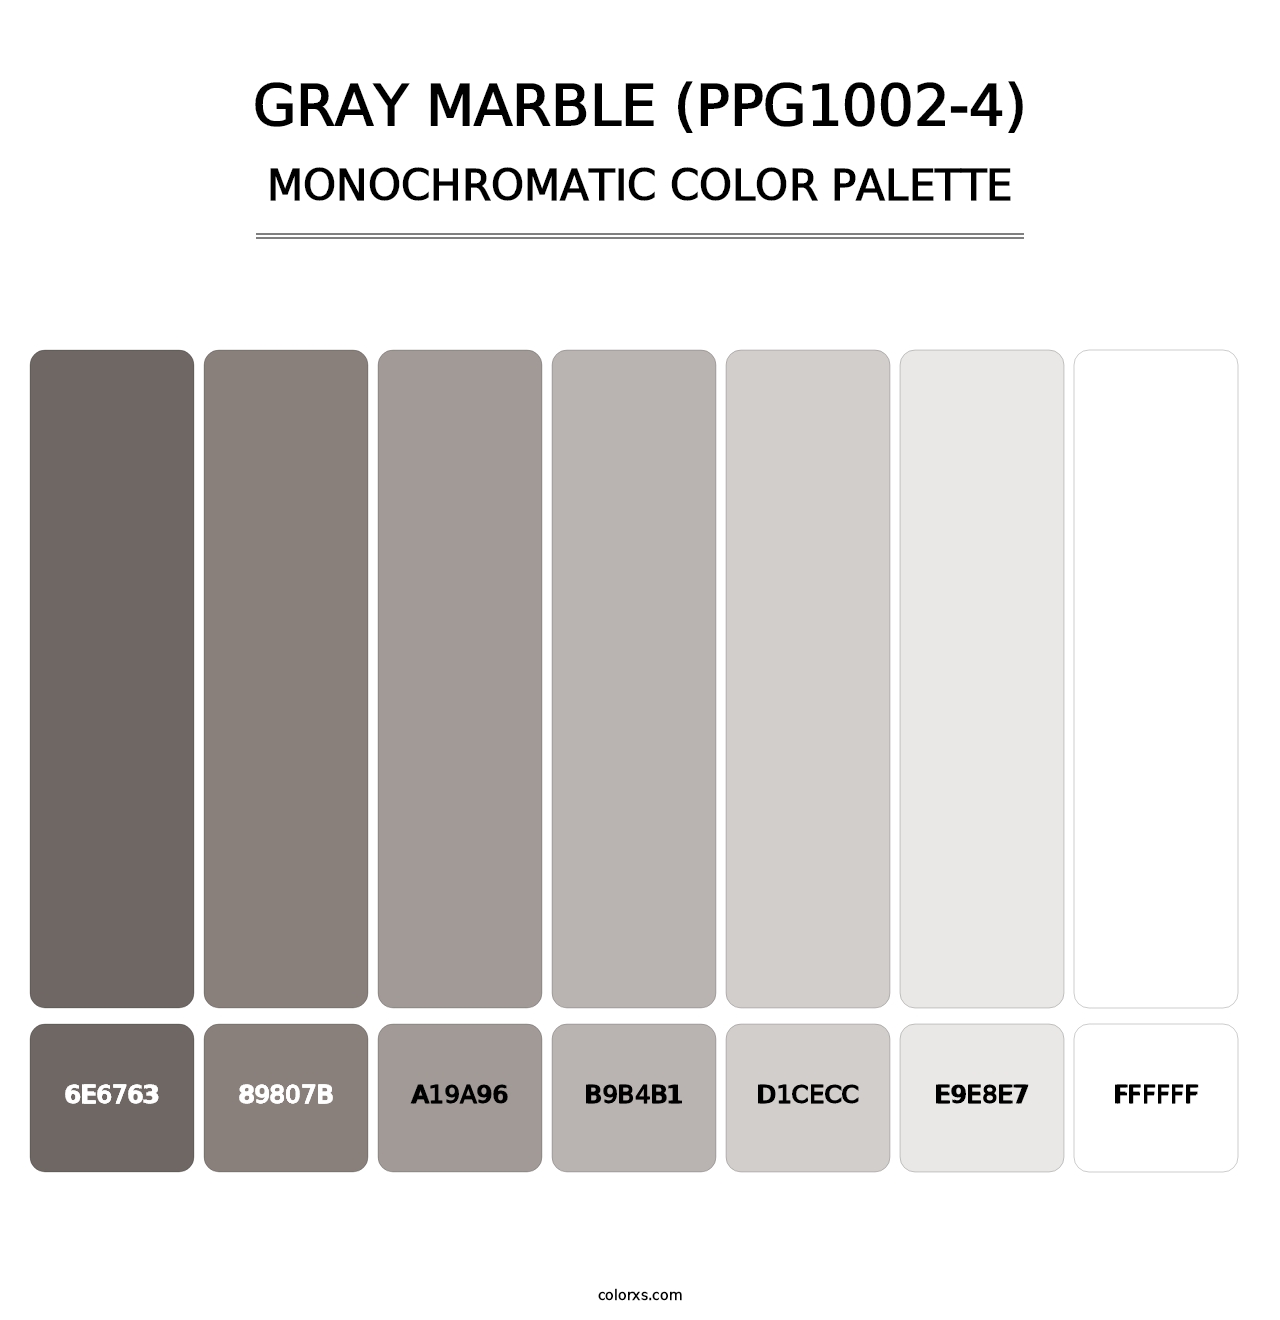 Gray Marble (PPG1002-4) - Monochromatic Color Palette